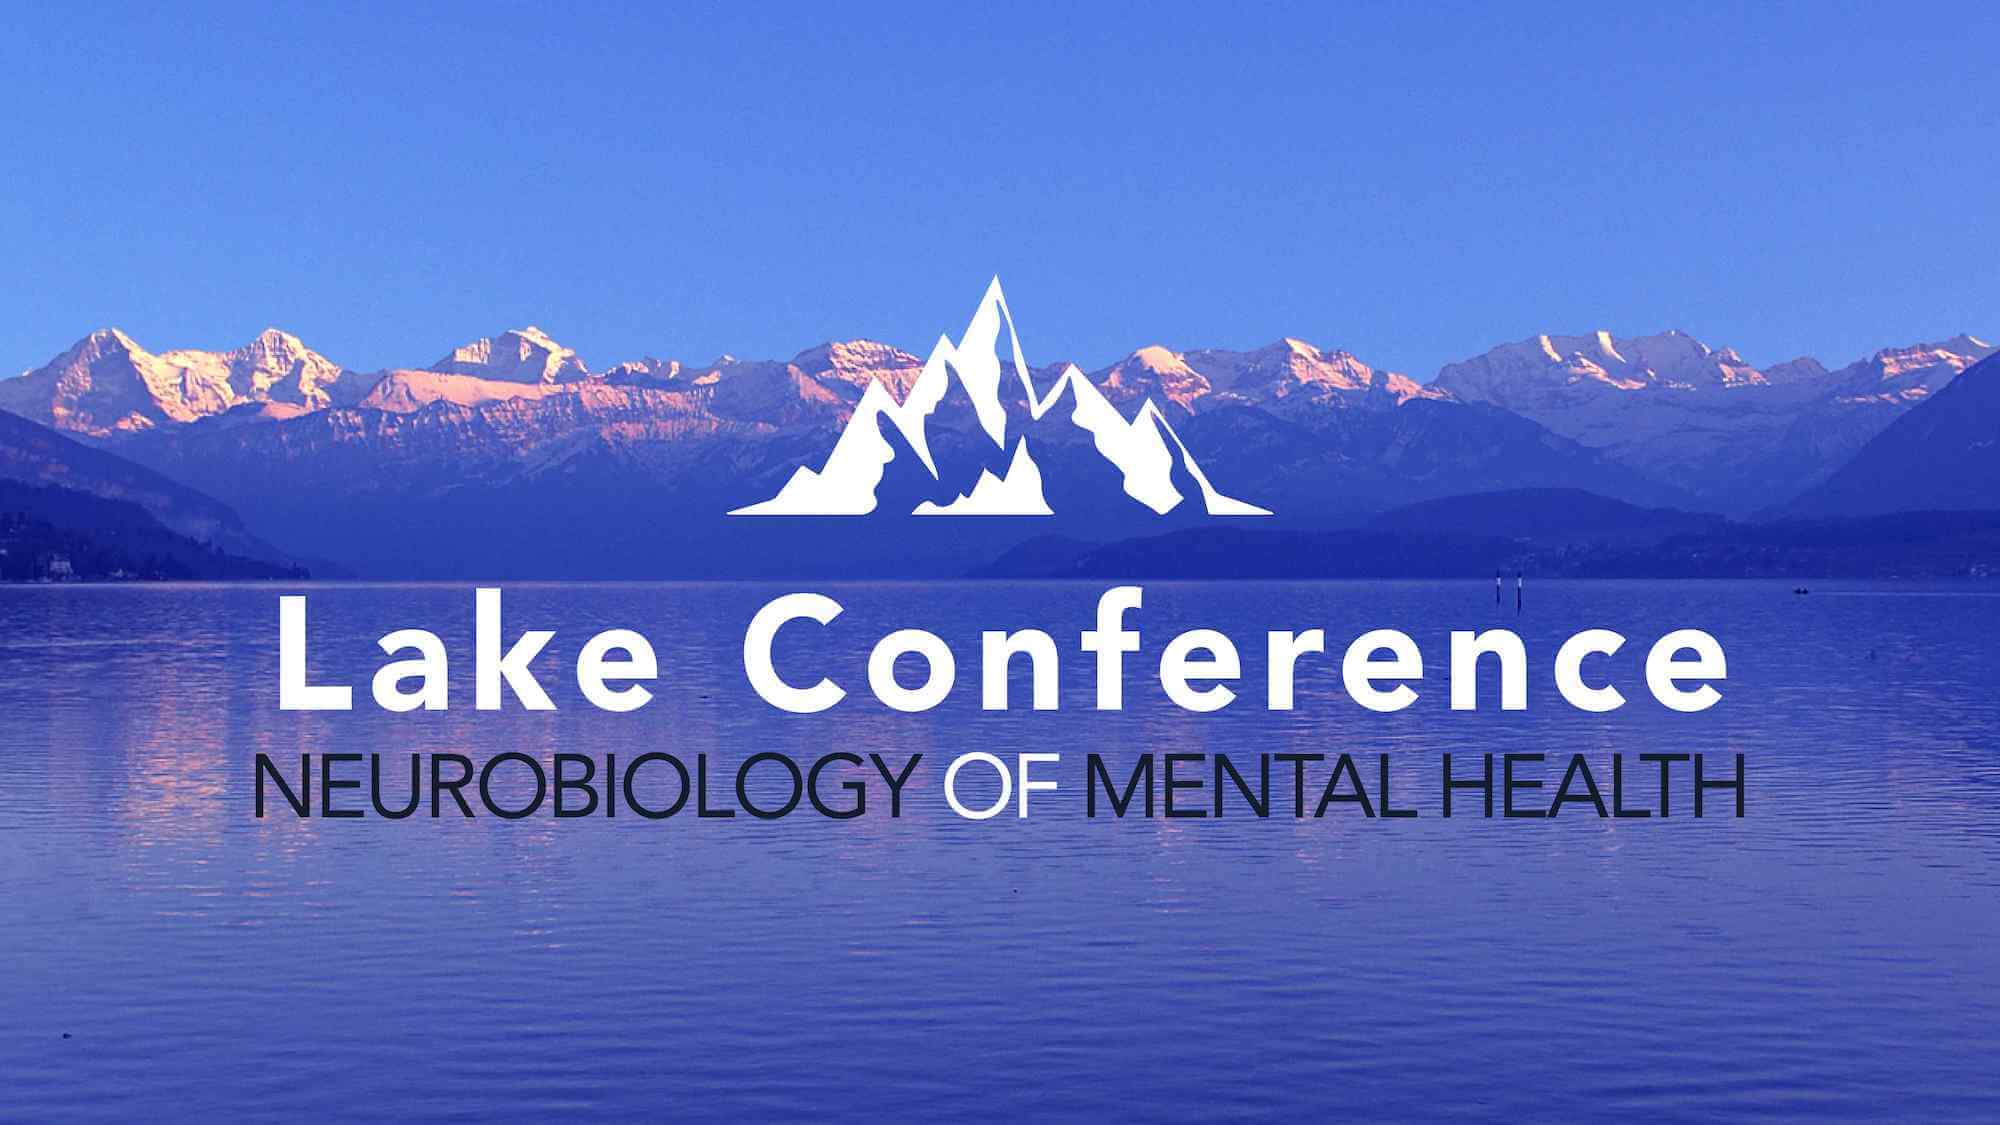 Lake Conference Image